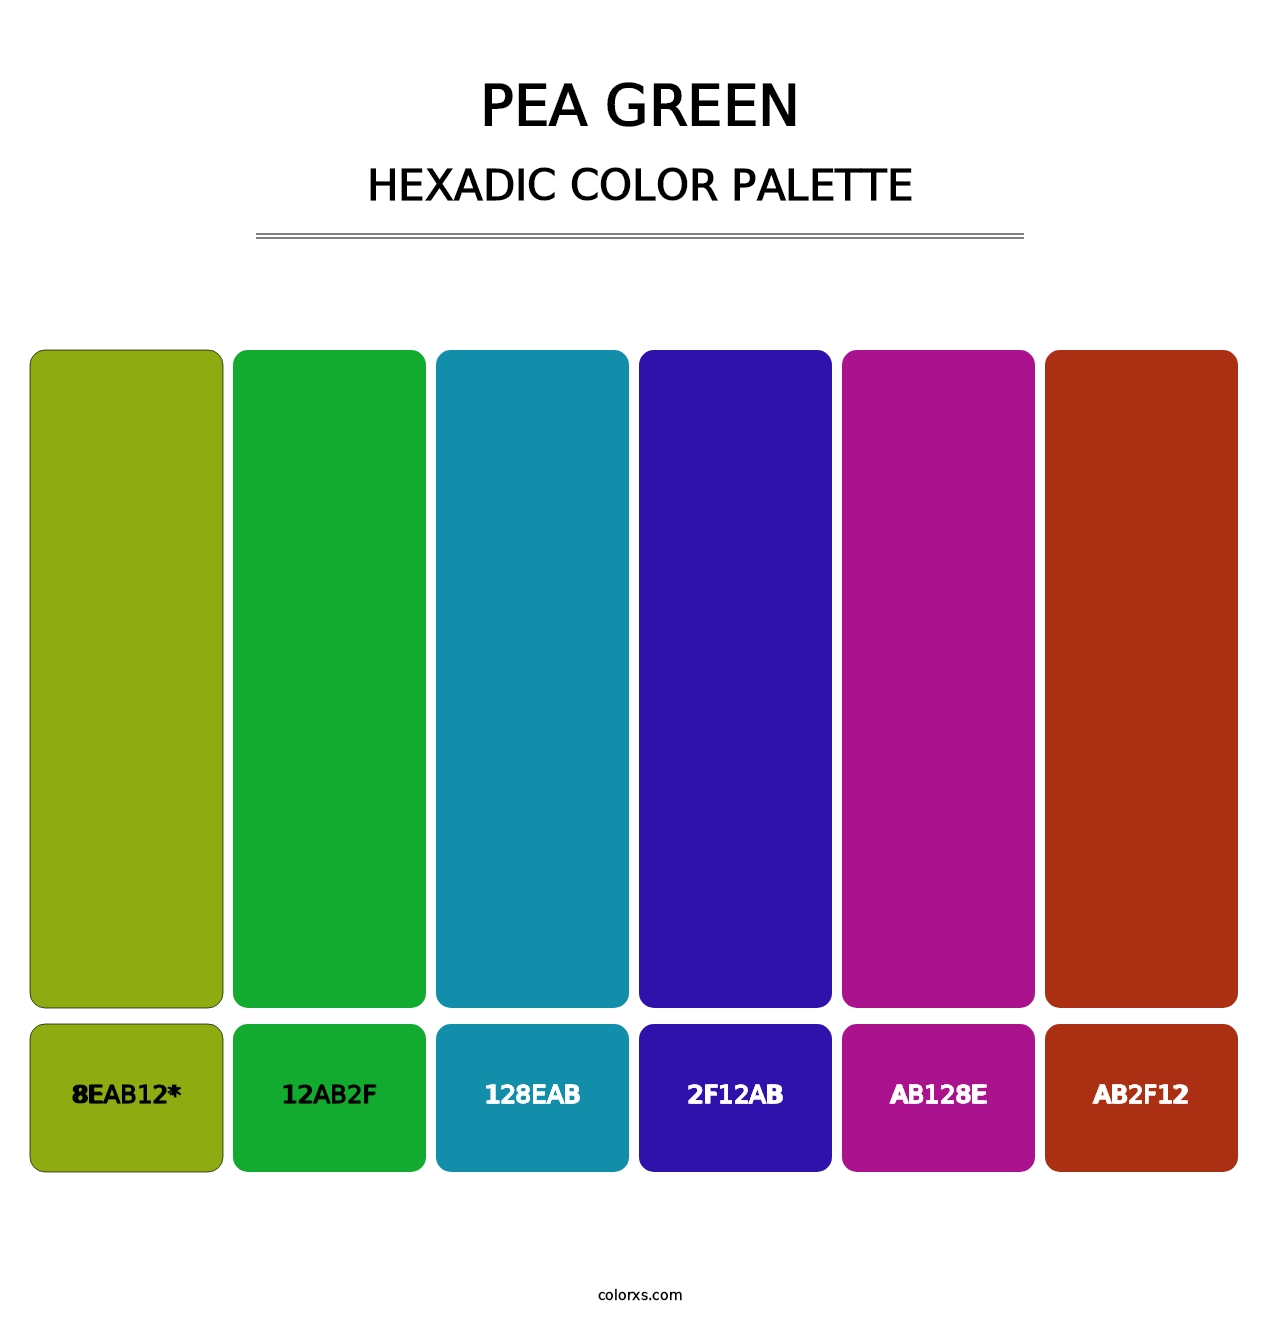 Pea Green - Hexadic Color Palette